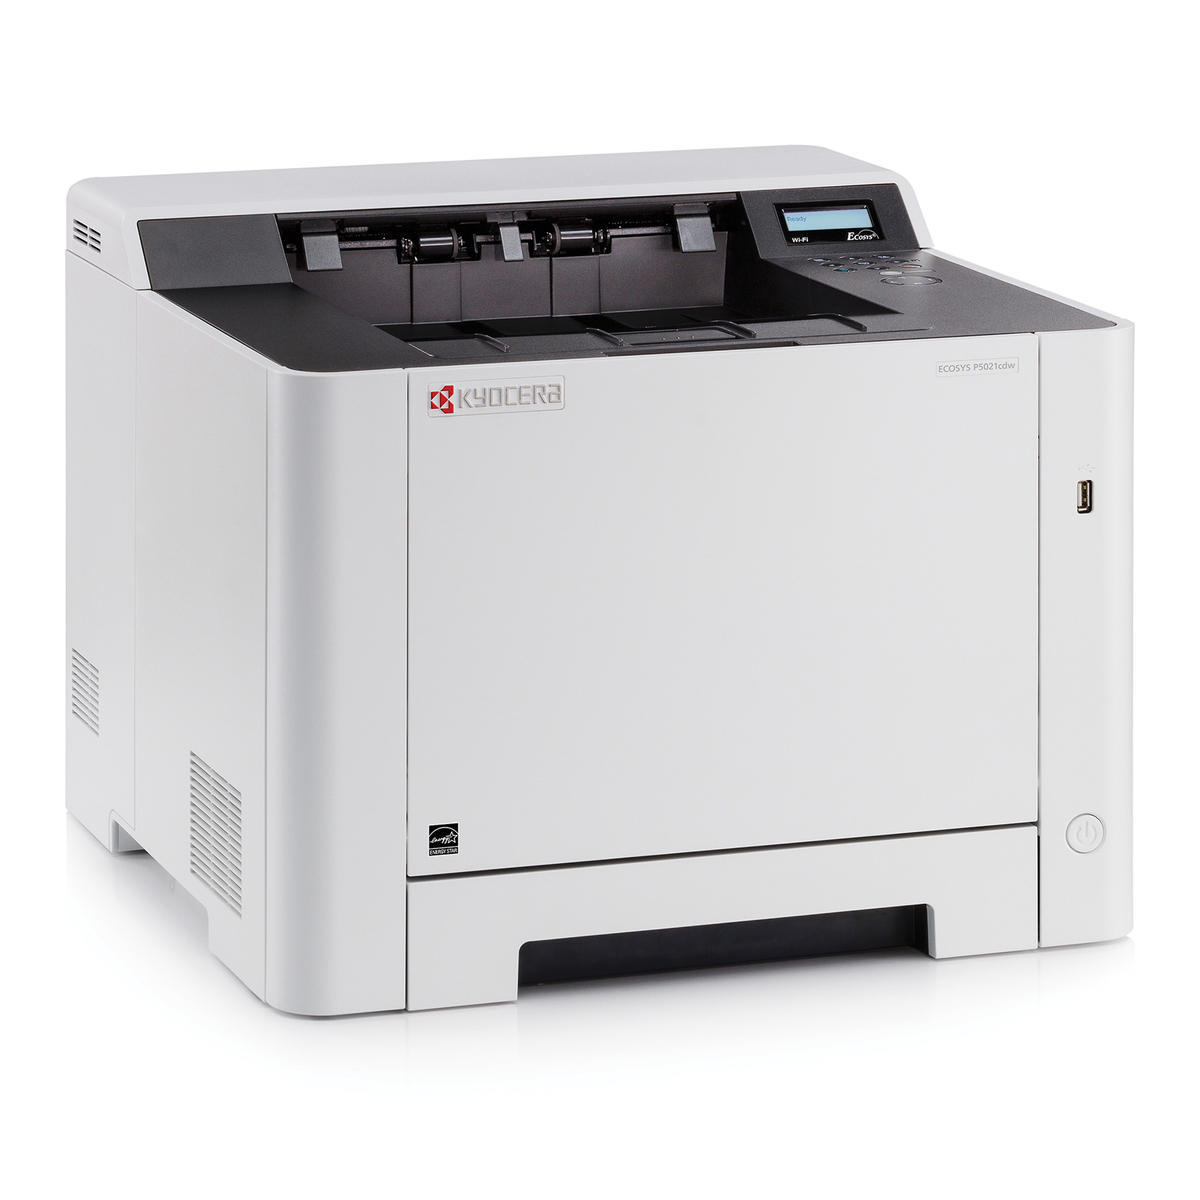 Kyocera Printers:  The Kyocera ECOSYS P5021cdw Printer